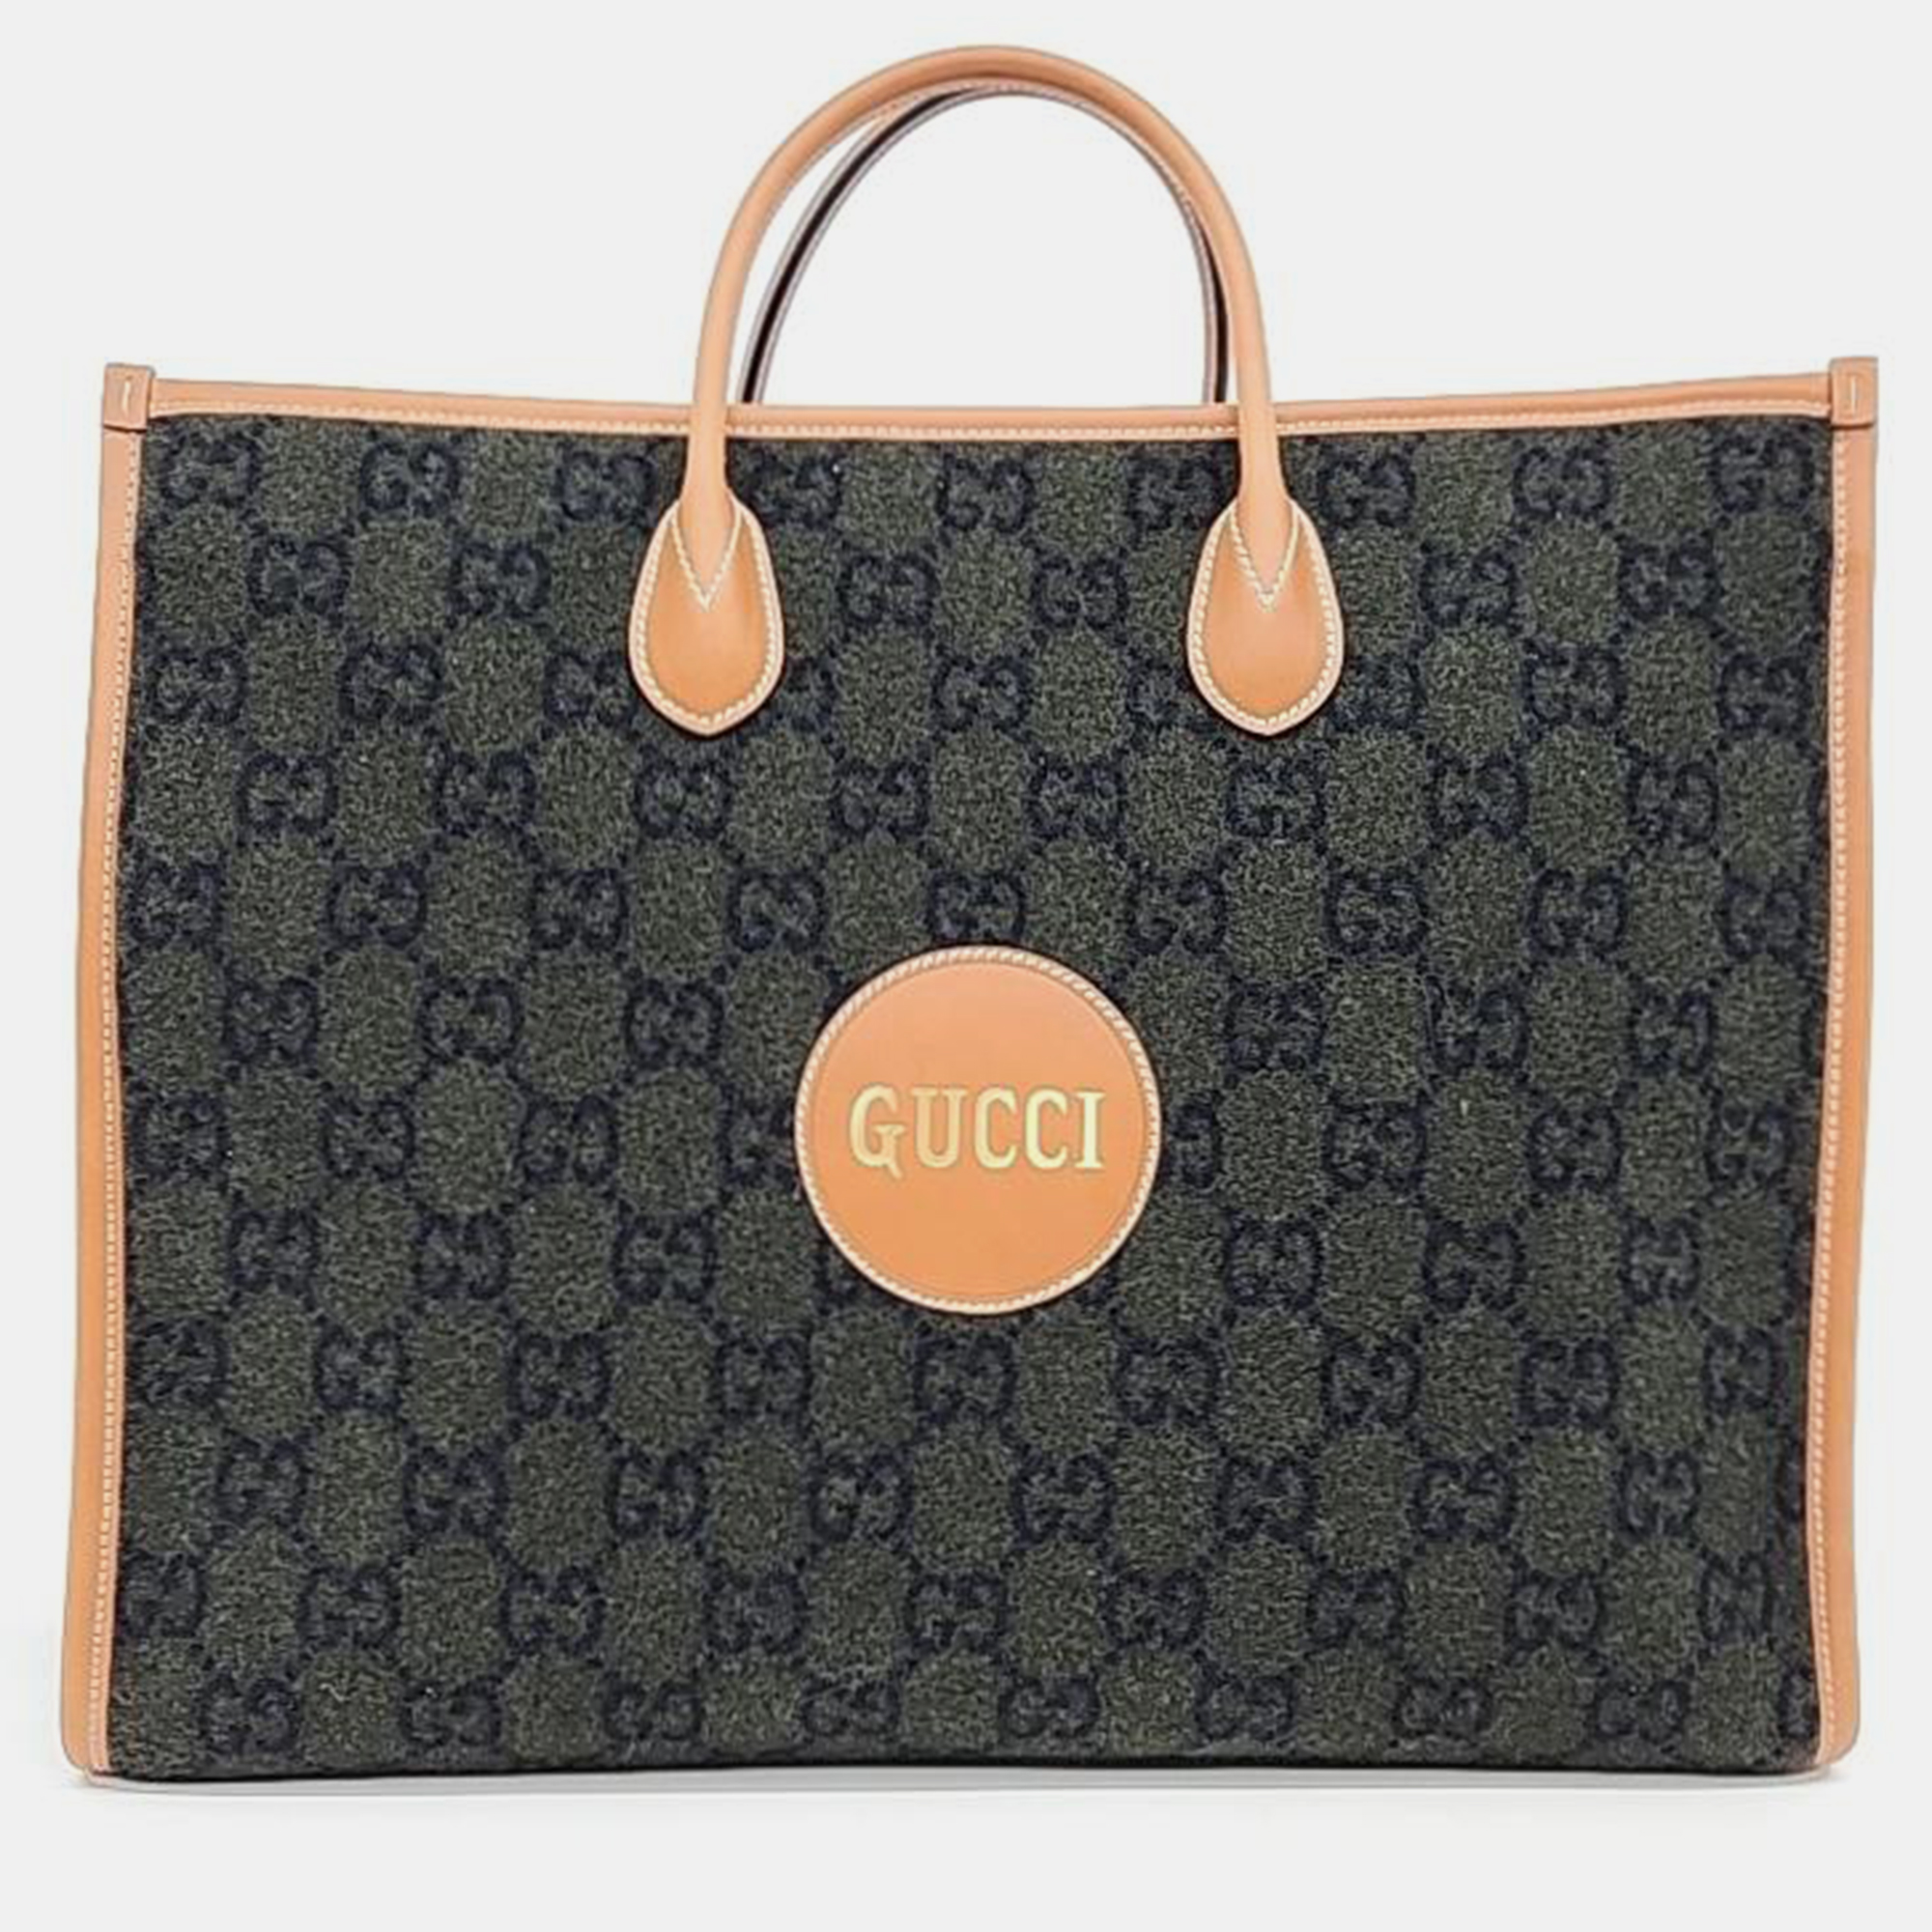 Gucci tote and shoulder bag